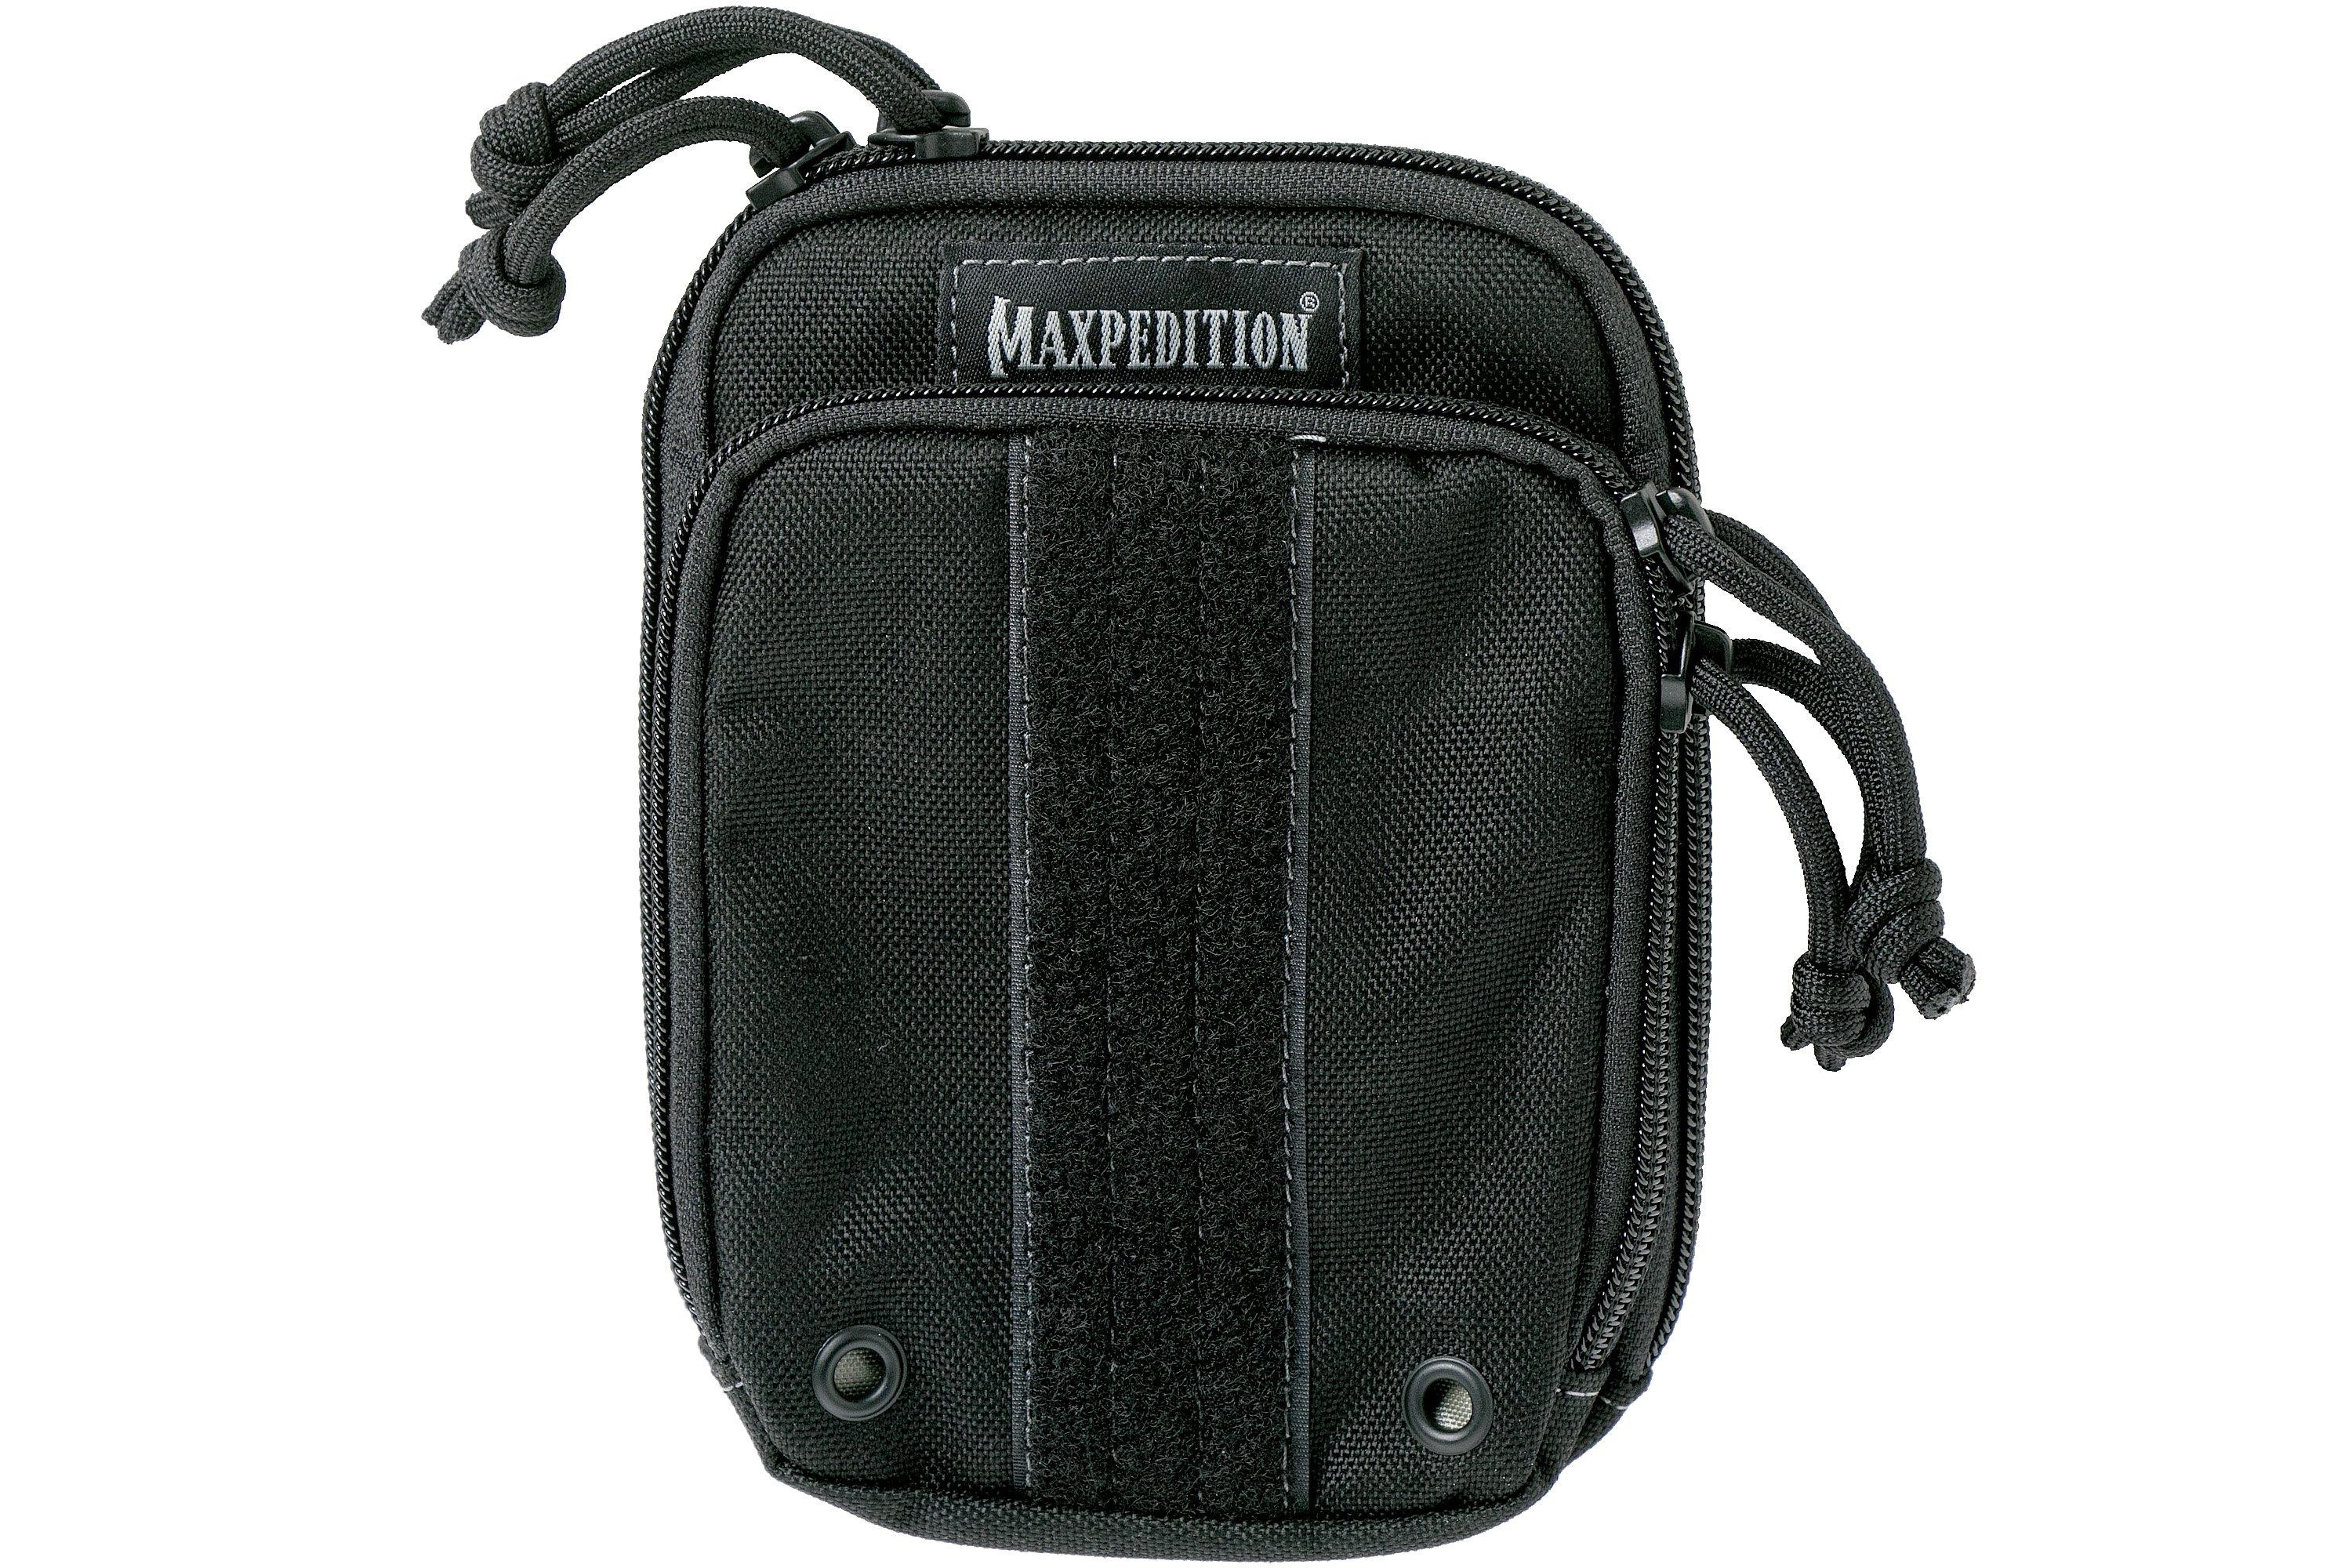 Maxpedition Black Medium Ziphook Pocket Organizer Pouch Bag Case PT1536B for sale online 